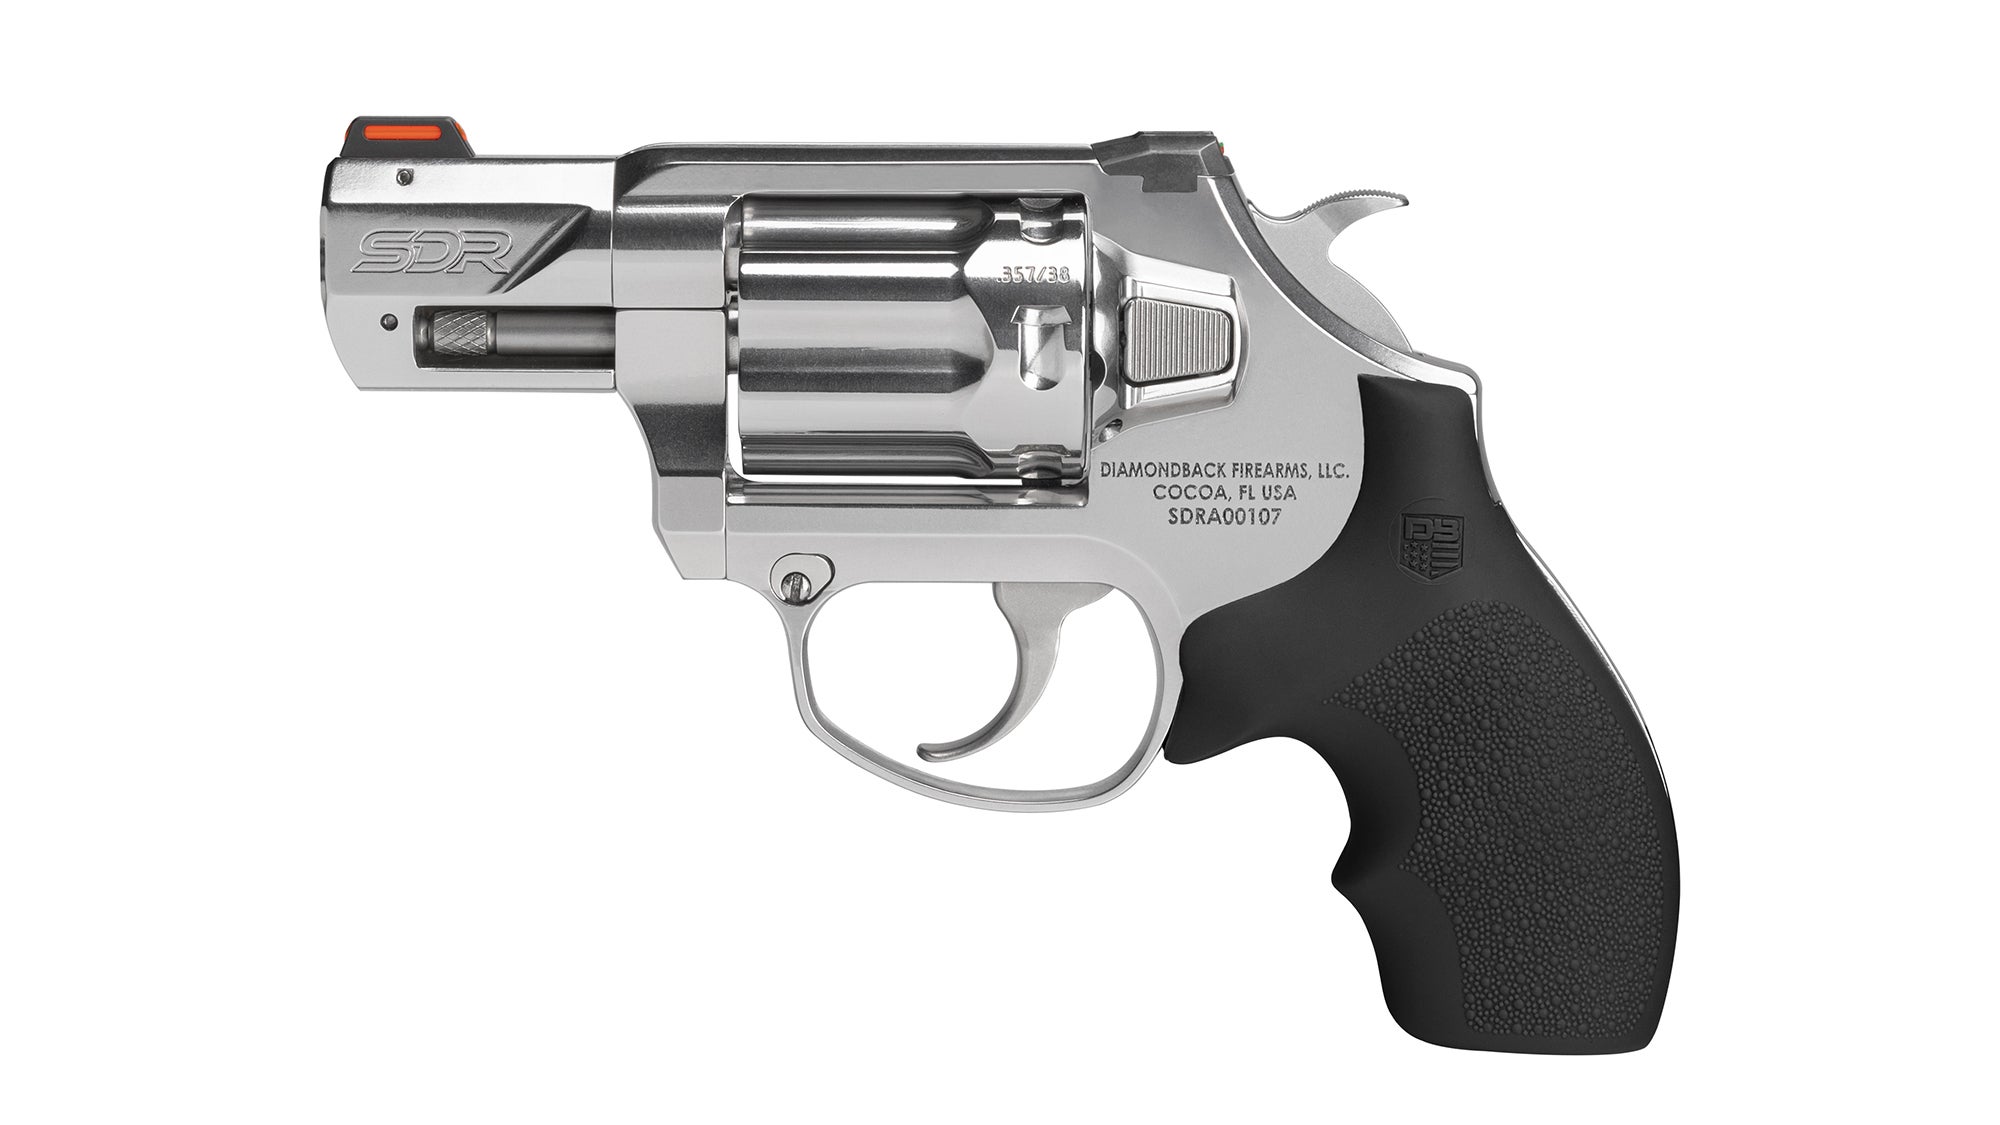 Diamondback SDR revolver on a white background